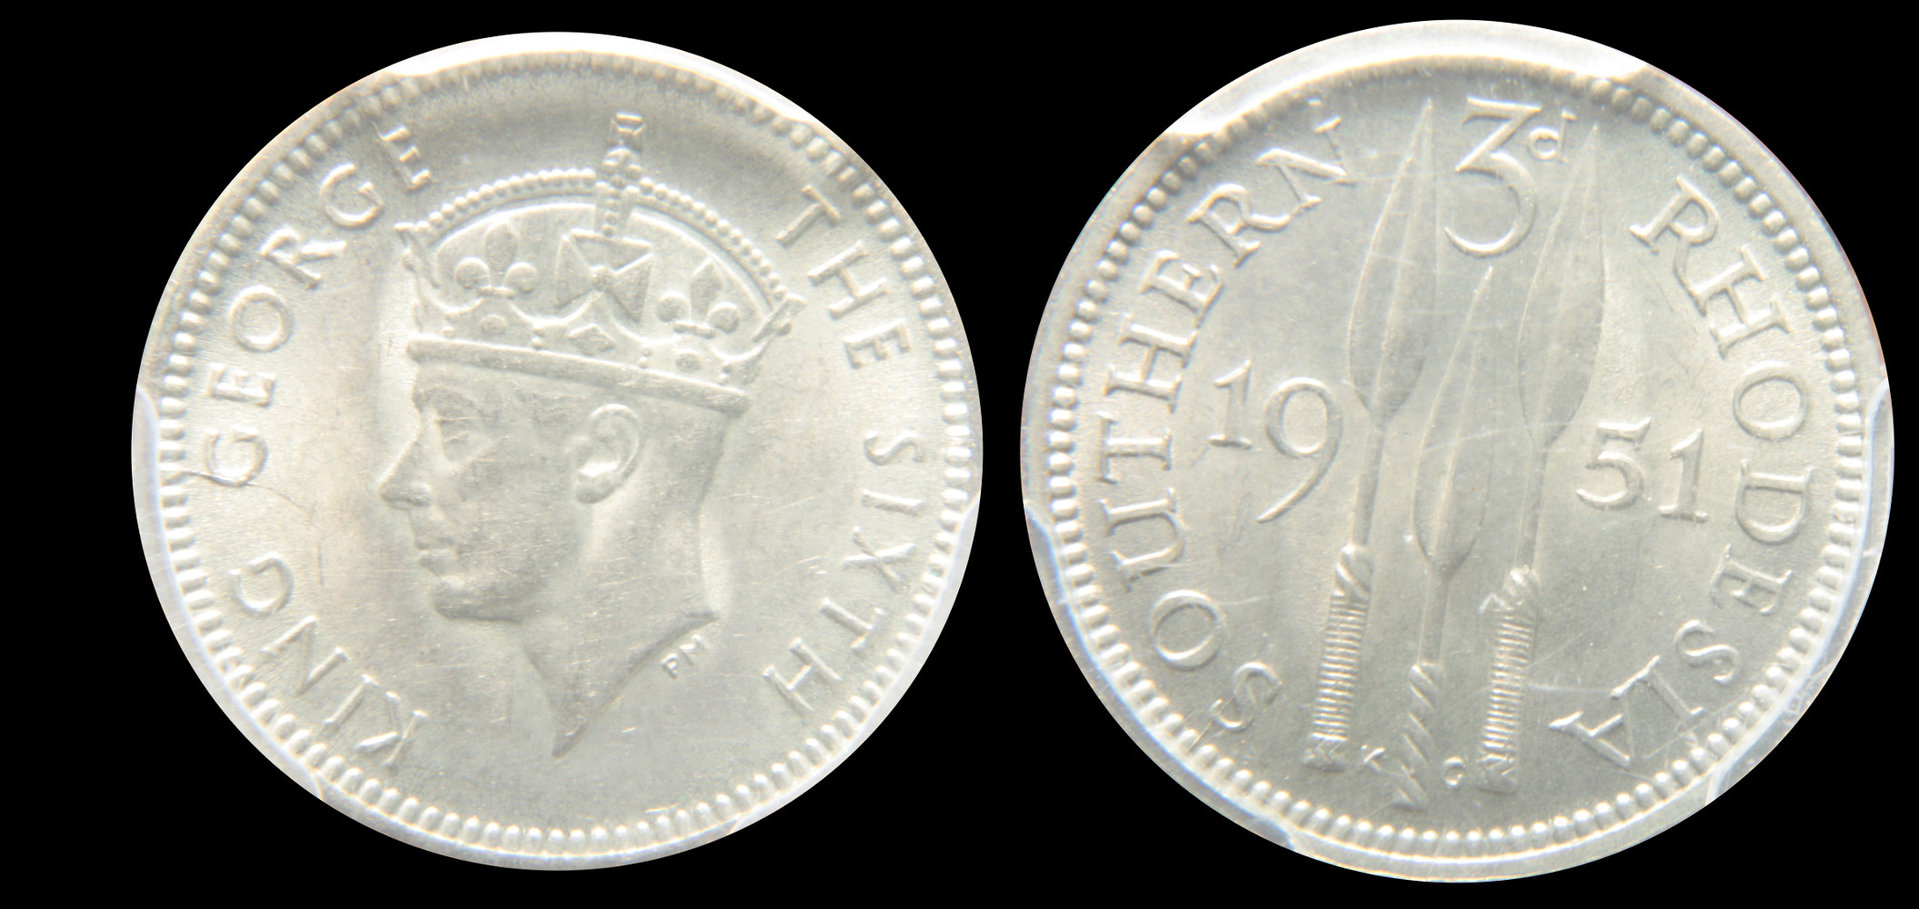 Southern Rhodesia - 1951 - 3 Pence - 20180721-1.jpg